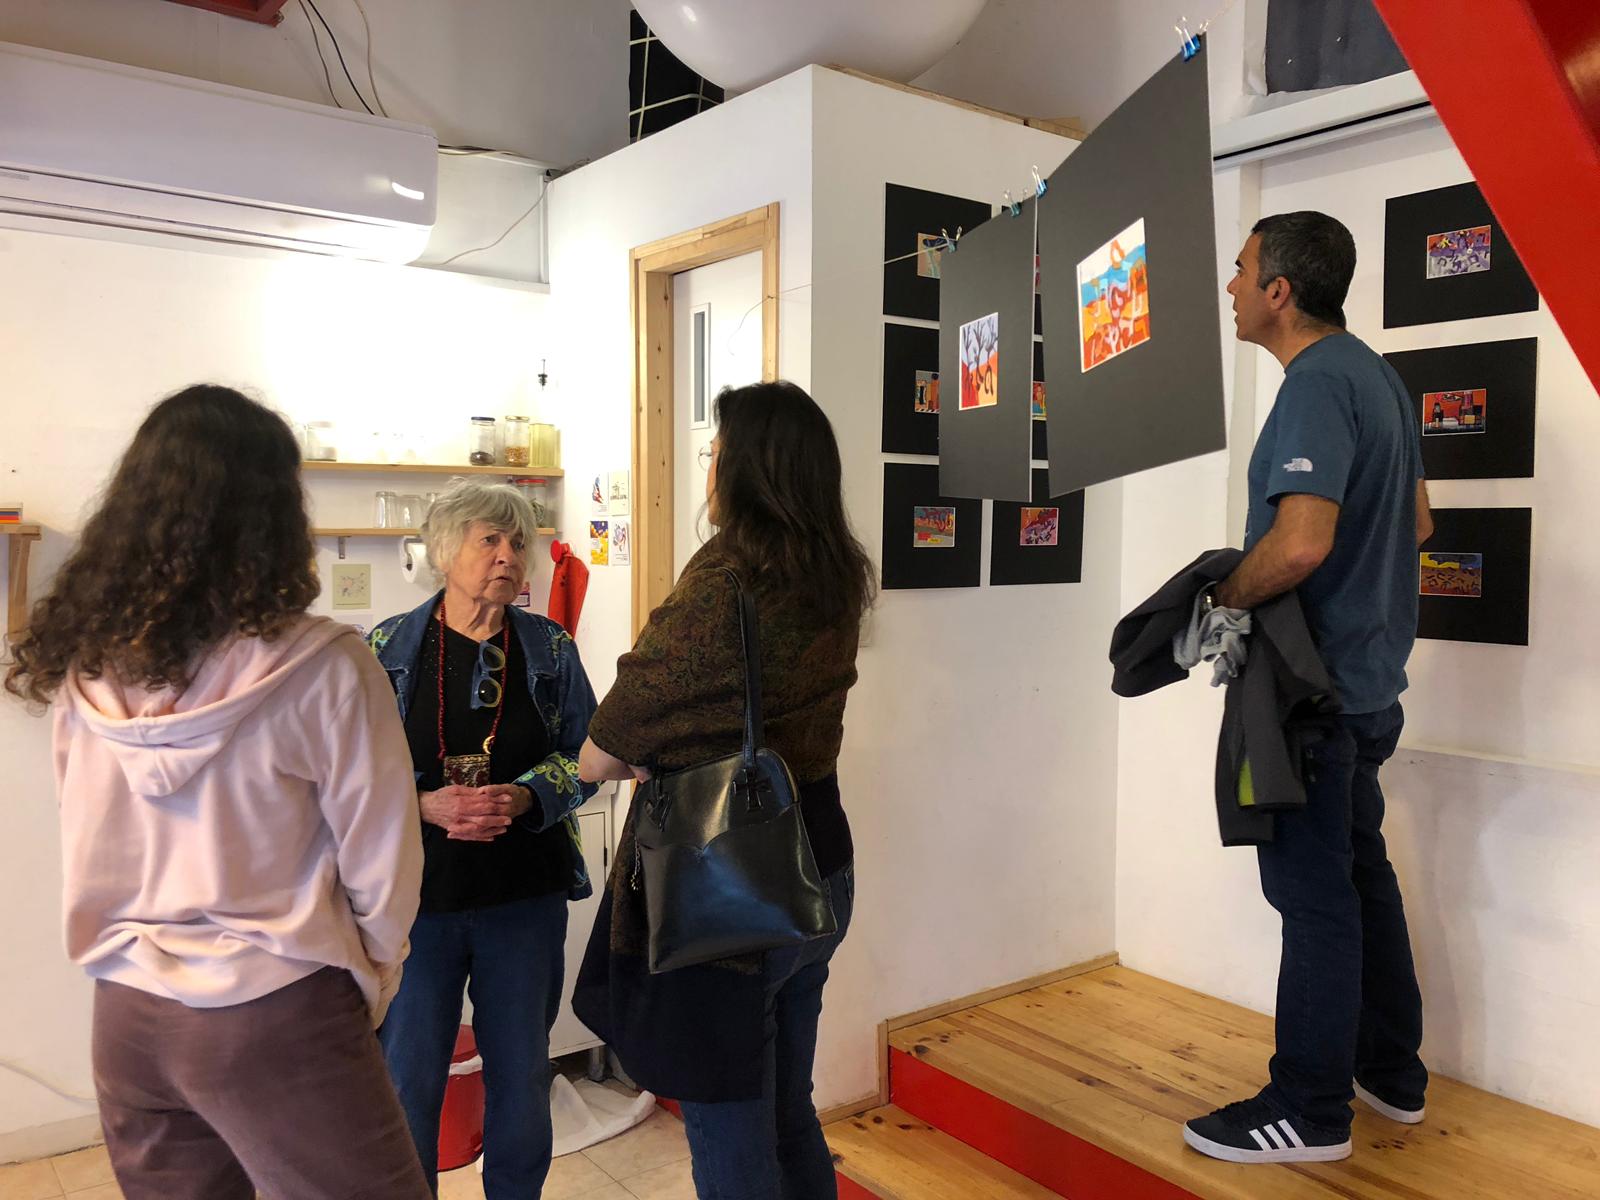 Exhibition in Tel-aviv, April 2019 - Eran Wolf